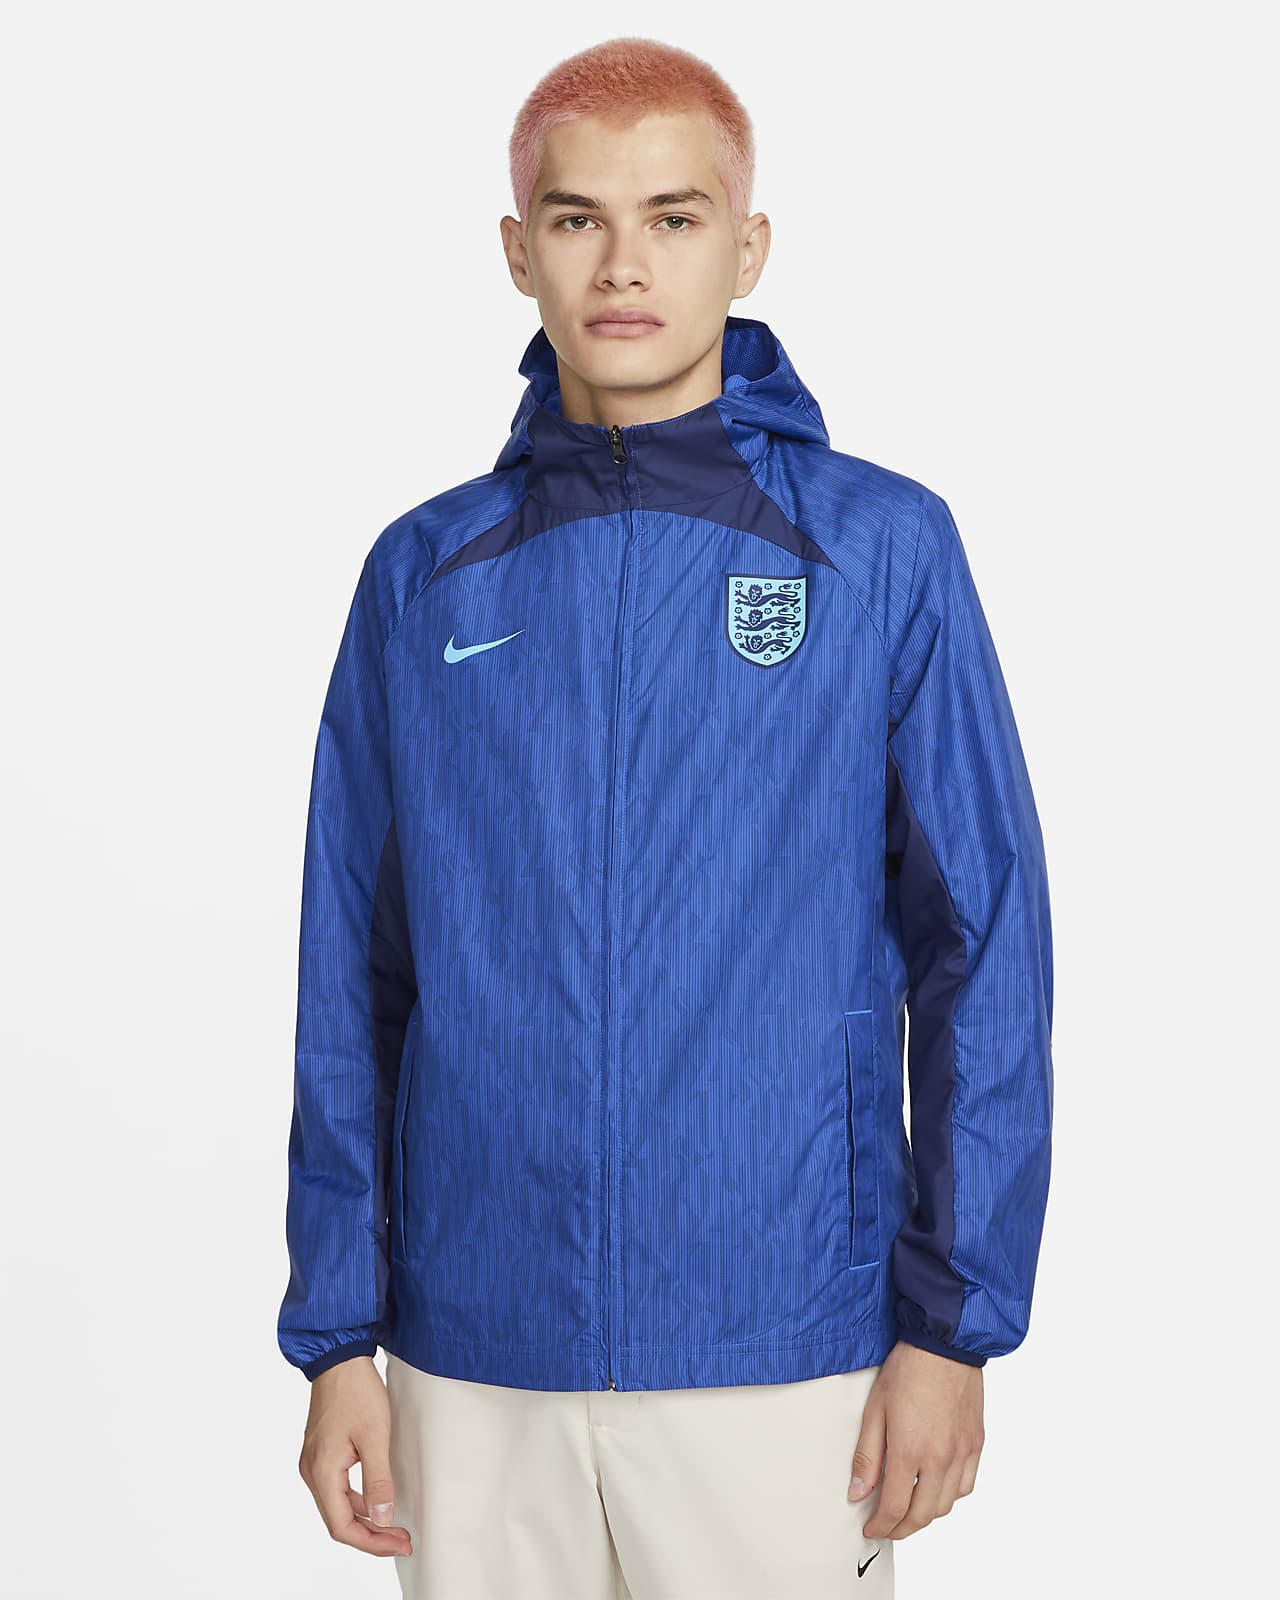 England AWF Men's Full-Zip Soccer Jacket